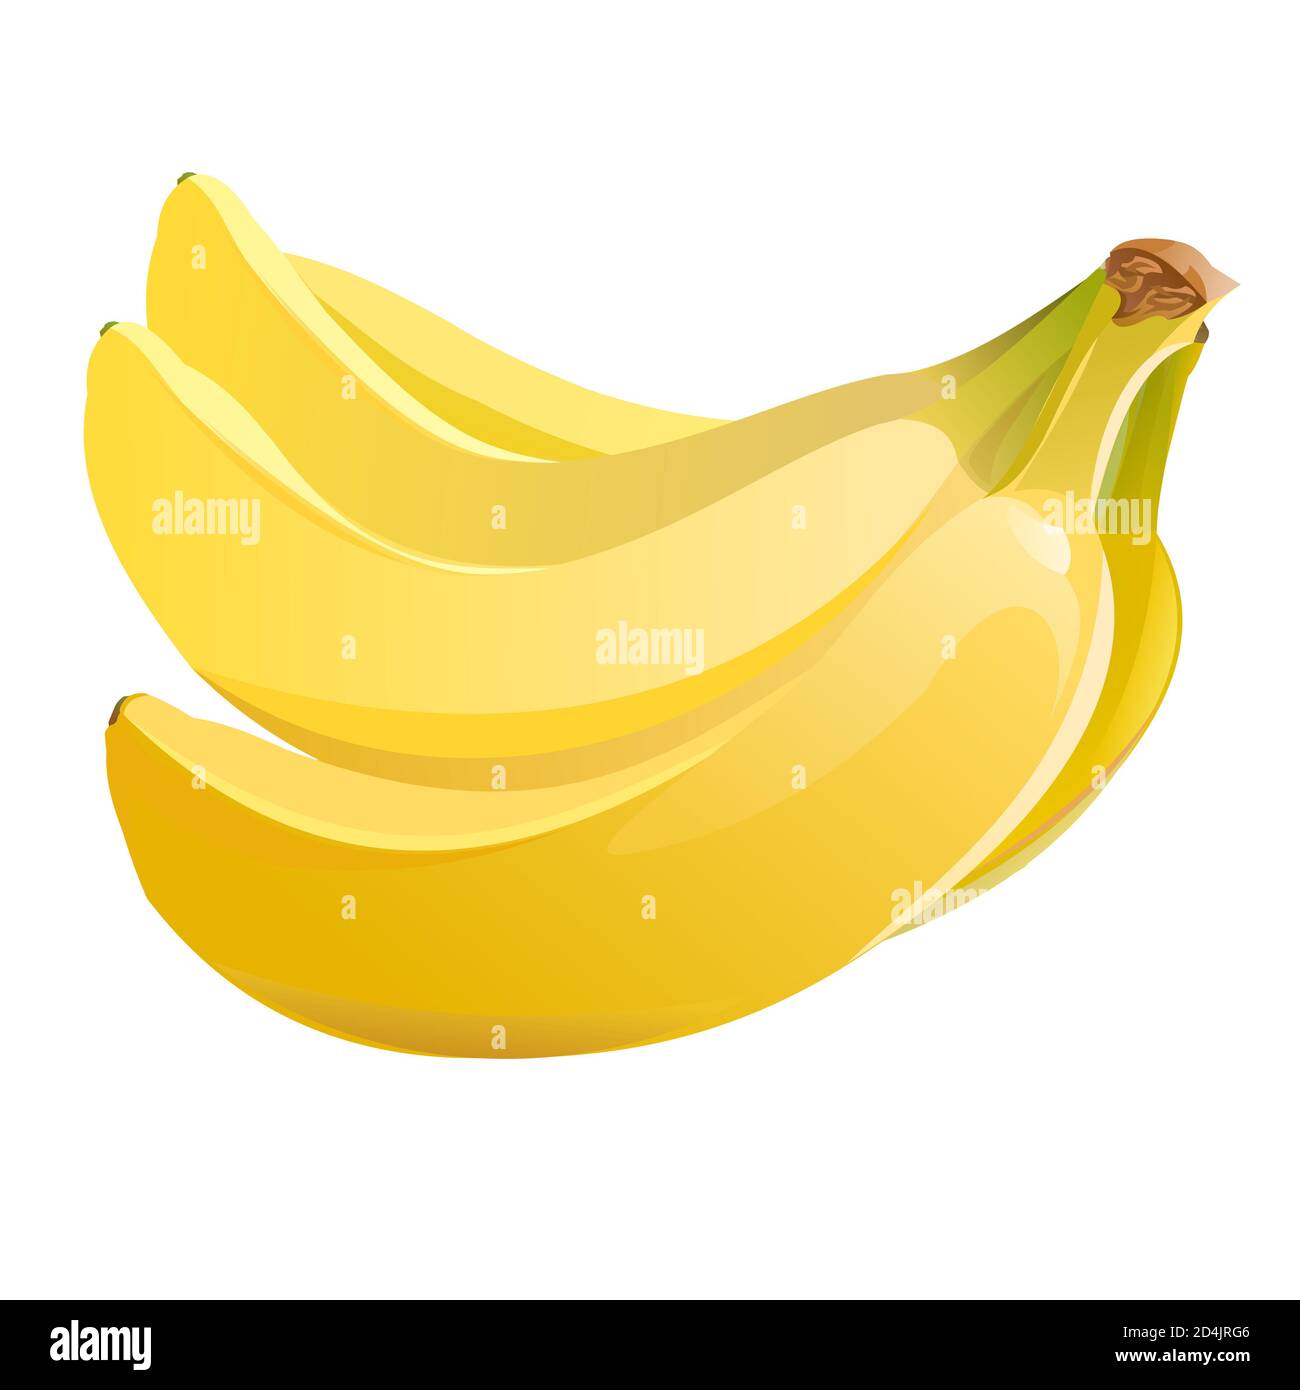 https://c8.alamy.com/comp/2D4JRG6/banana-sweet-tropical-fruit-ripe-yellow-banana-isolated-object-vector-illustration-2D4JRG6.jpg